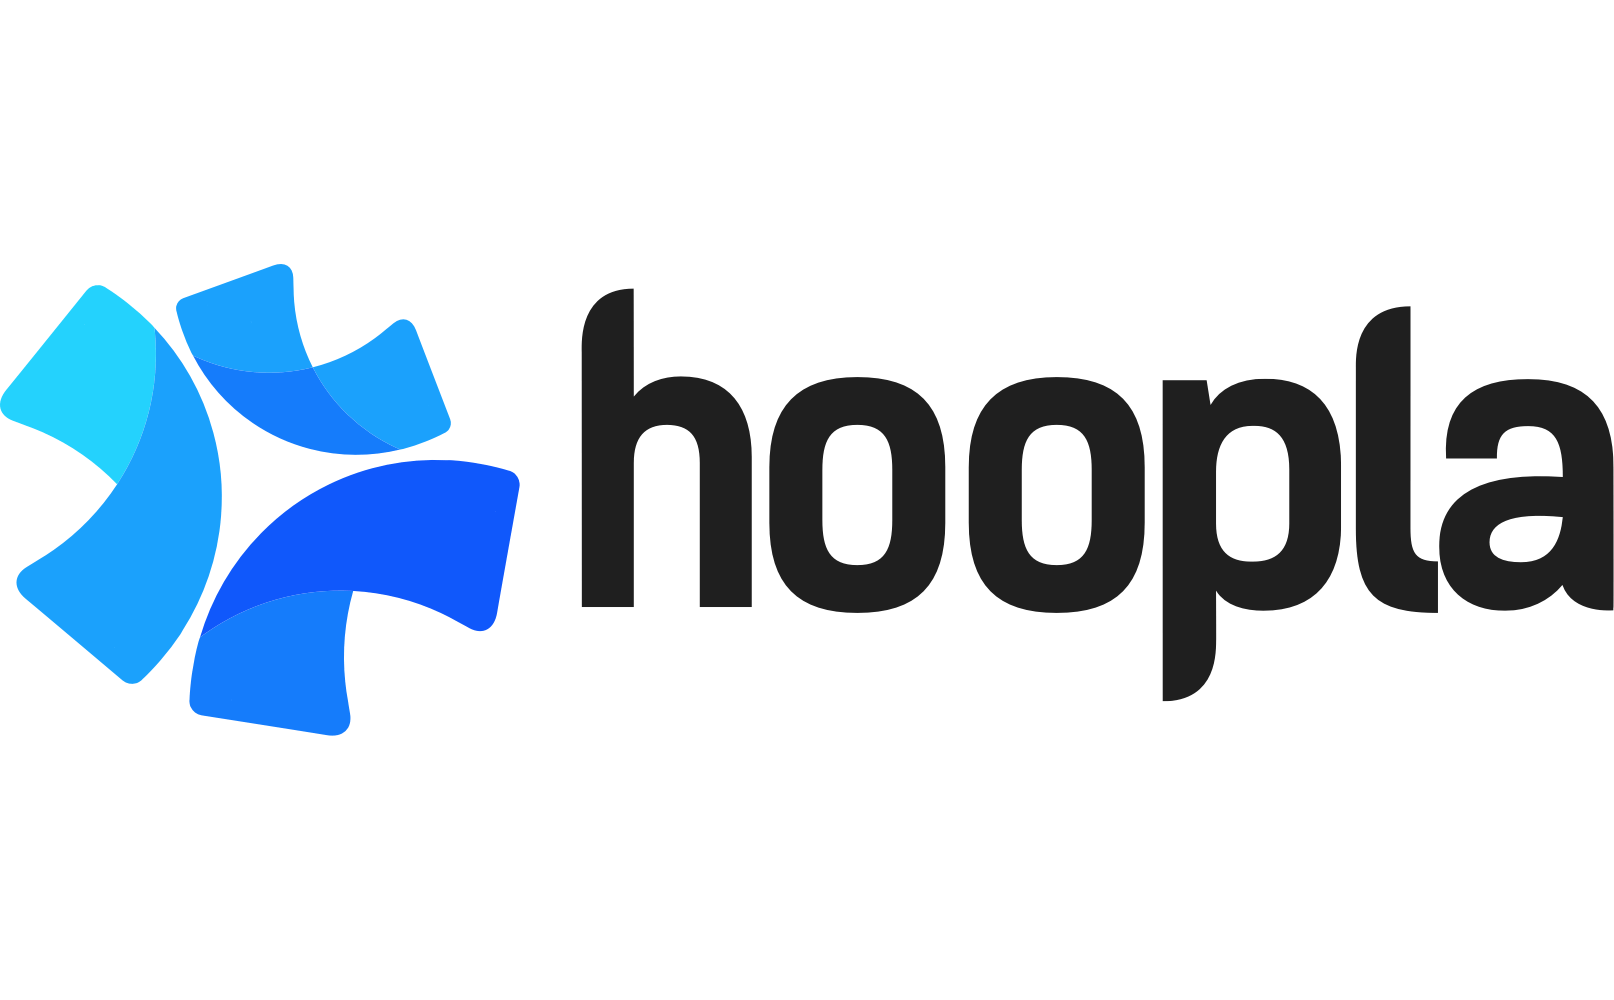 Hoopla Logo - Employee Motivation and Engagement Platform